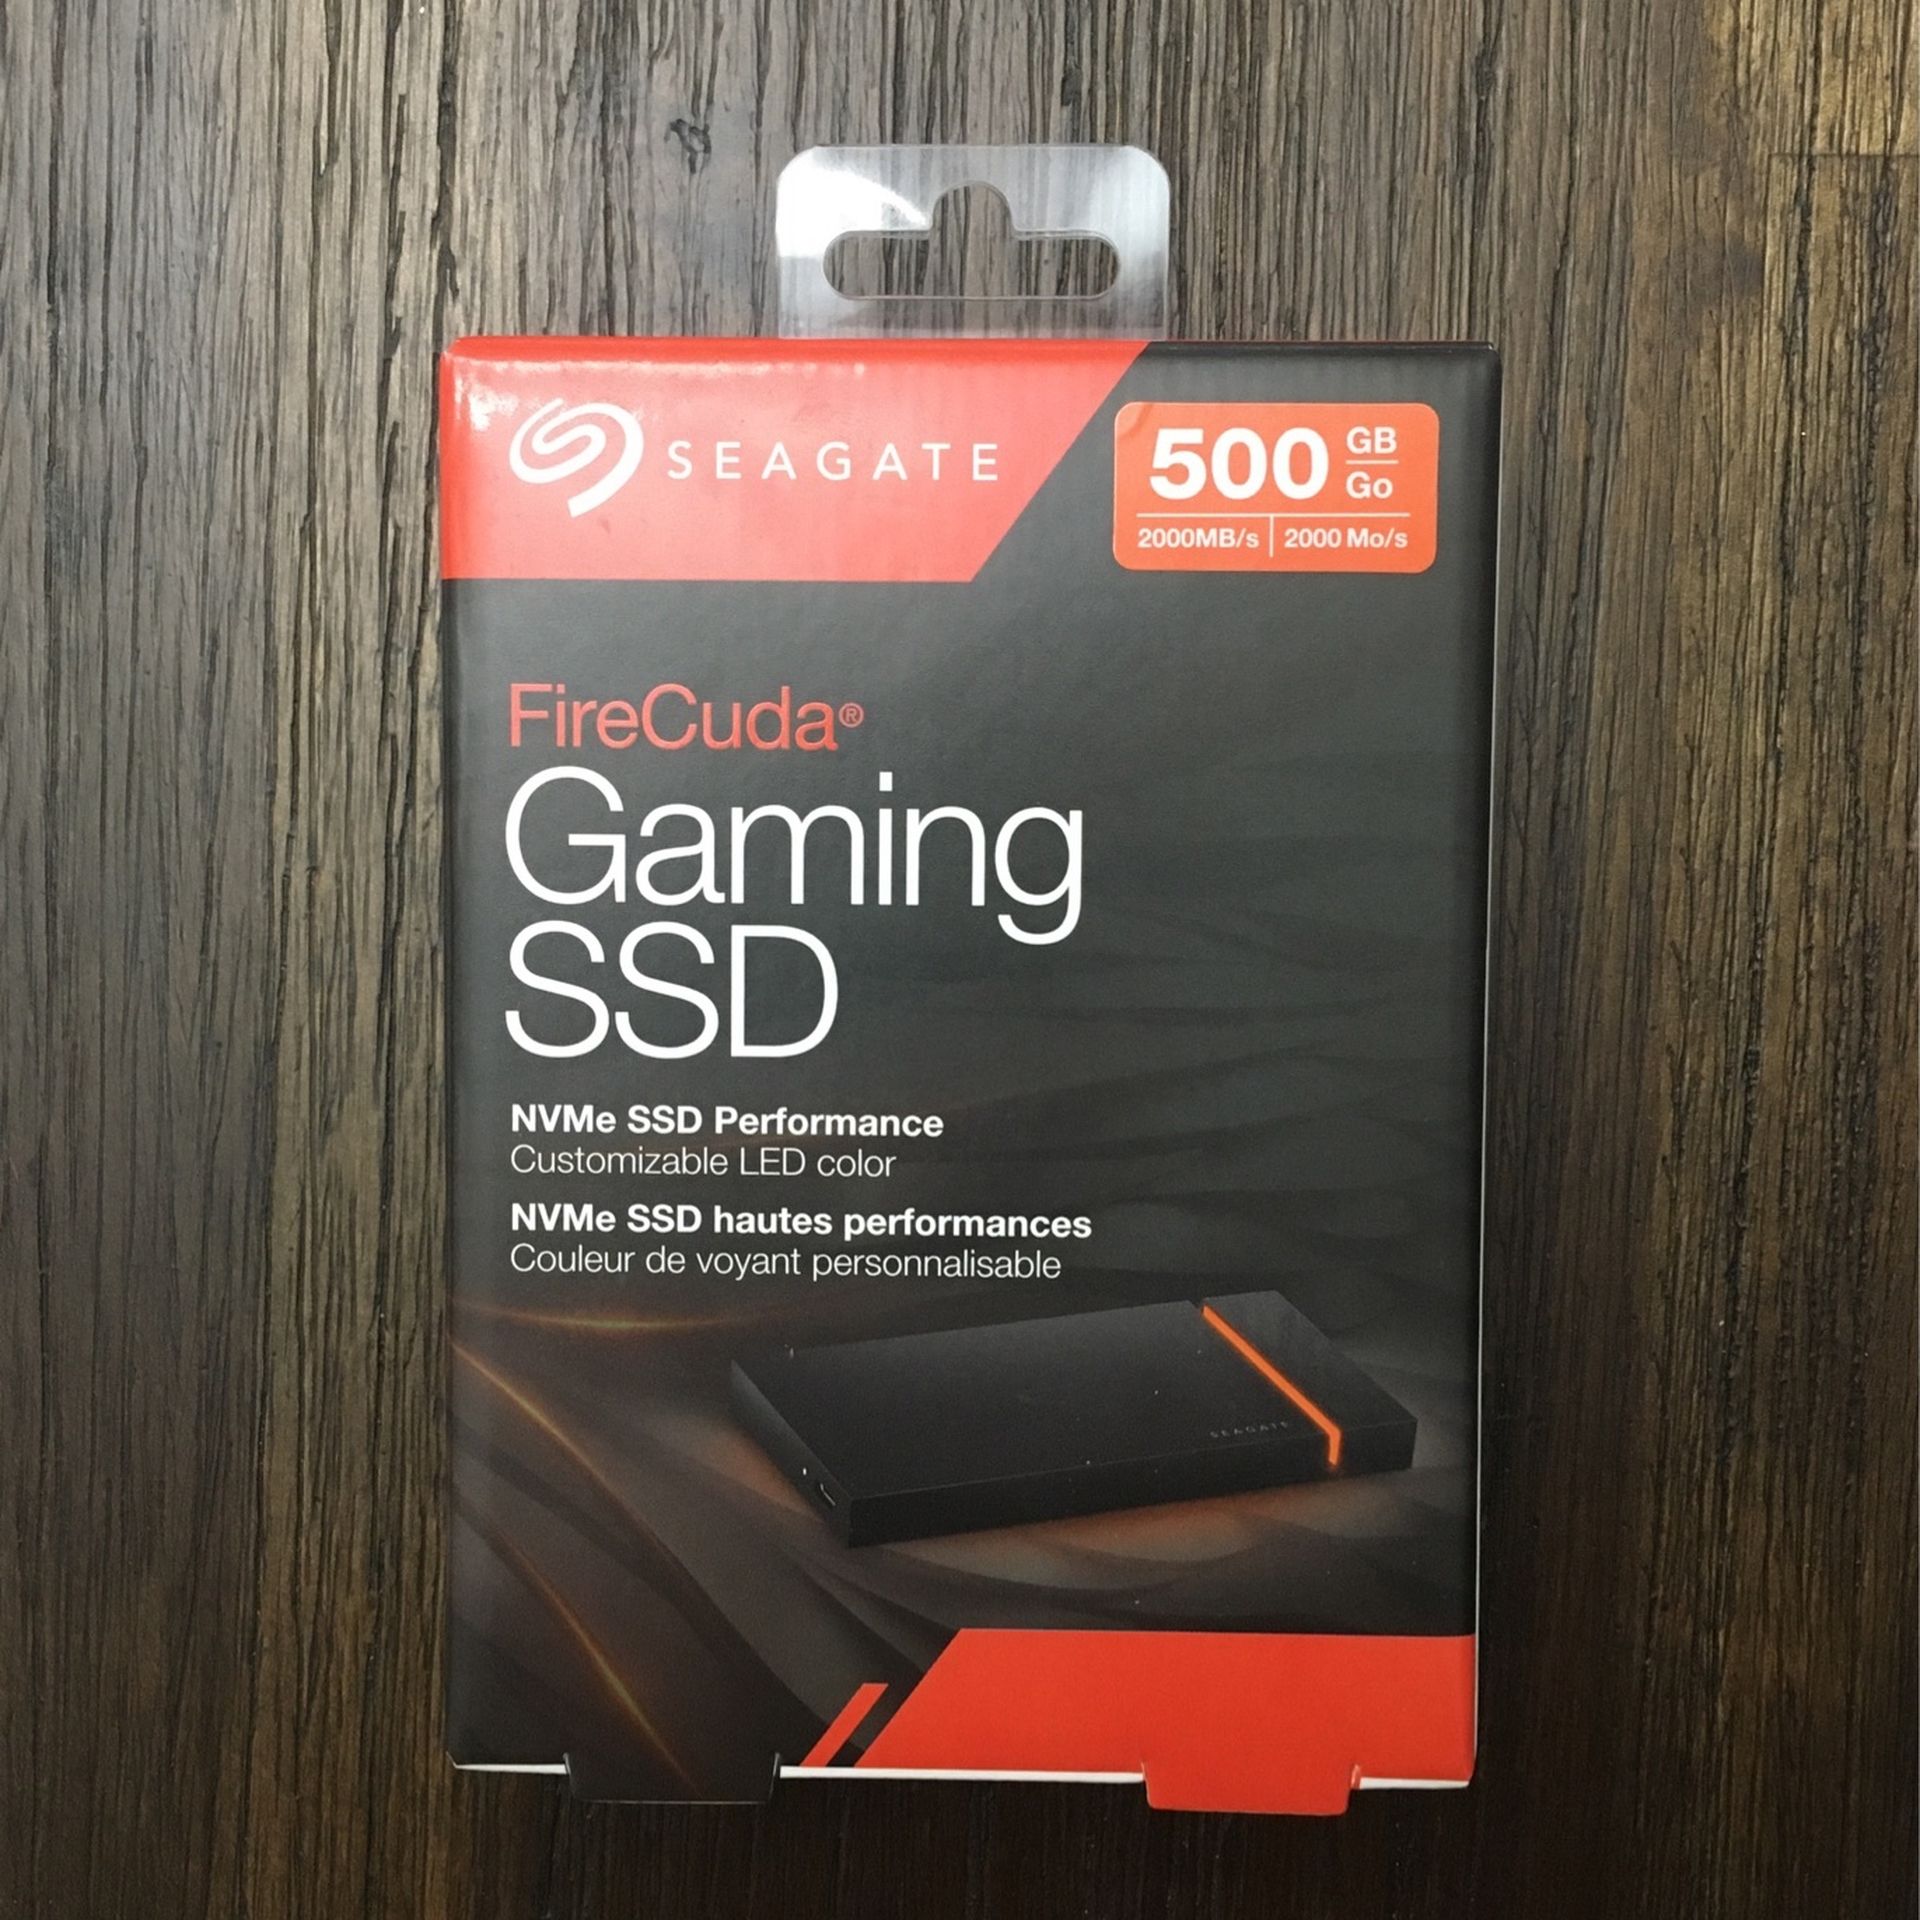 SeaGate FireCuda Gaming SSD 500GB